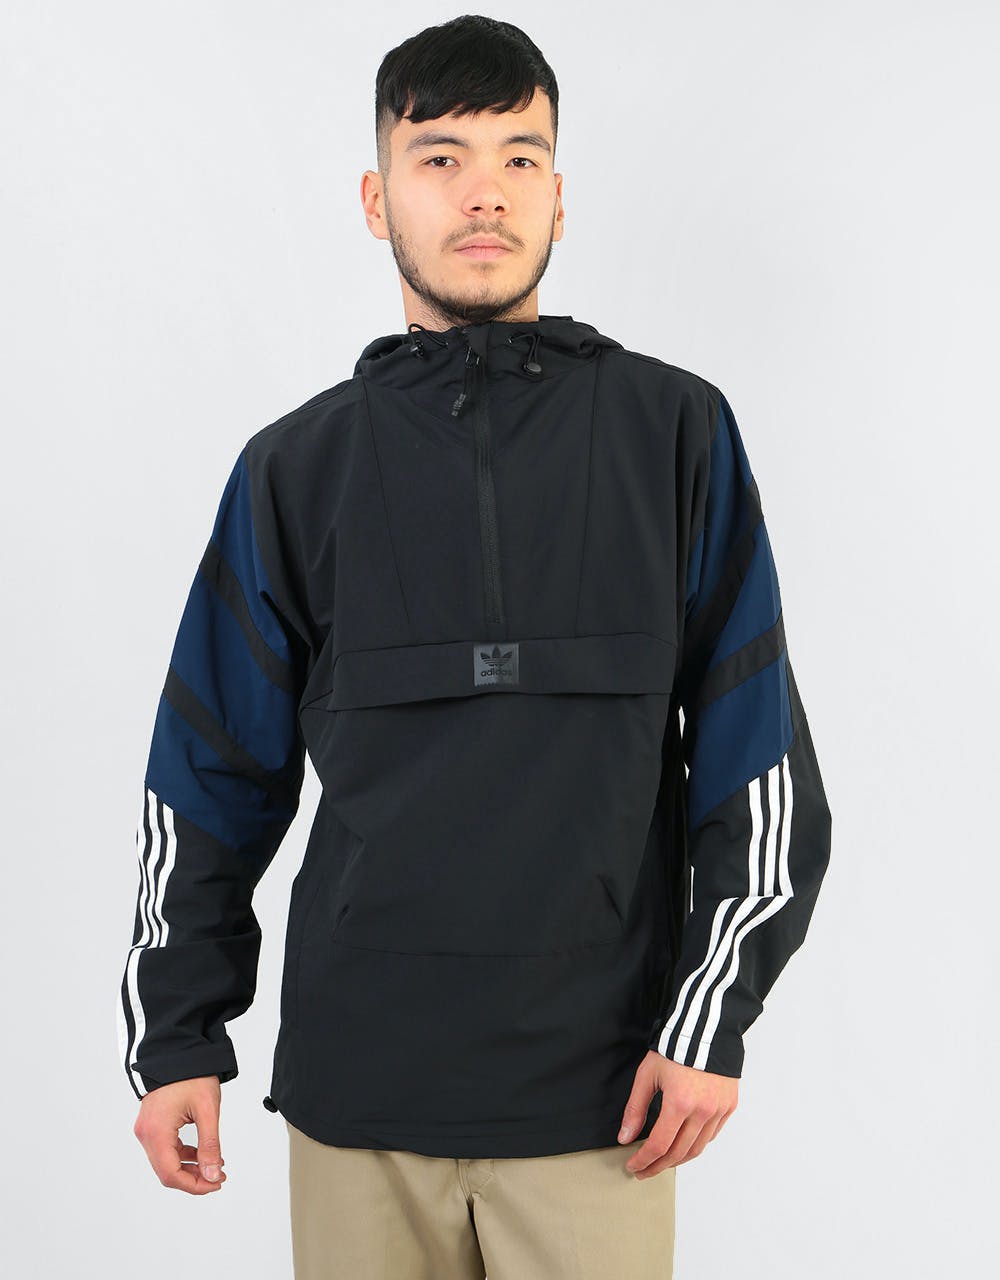 Adidas 3ST Jacket - Black/Collegiate Navy/Carbon